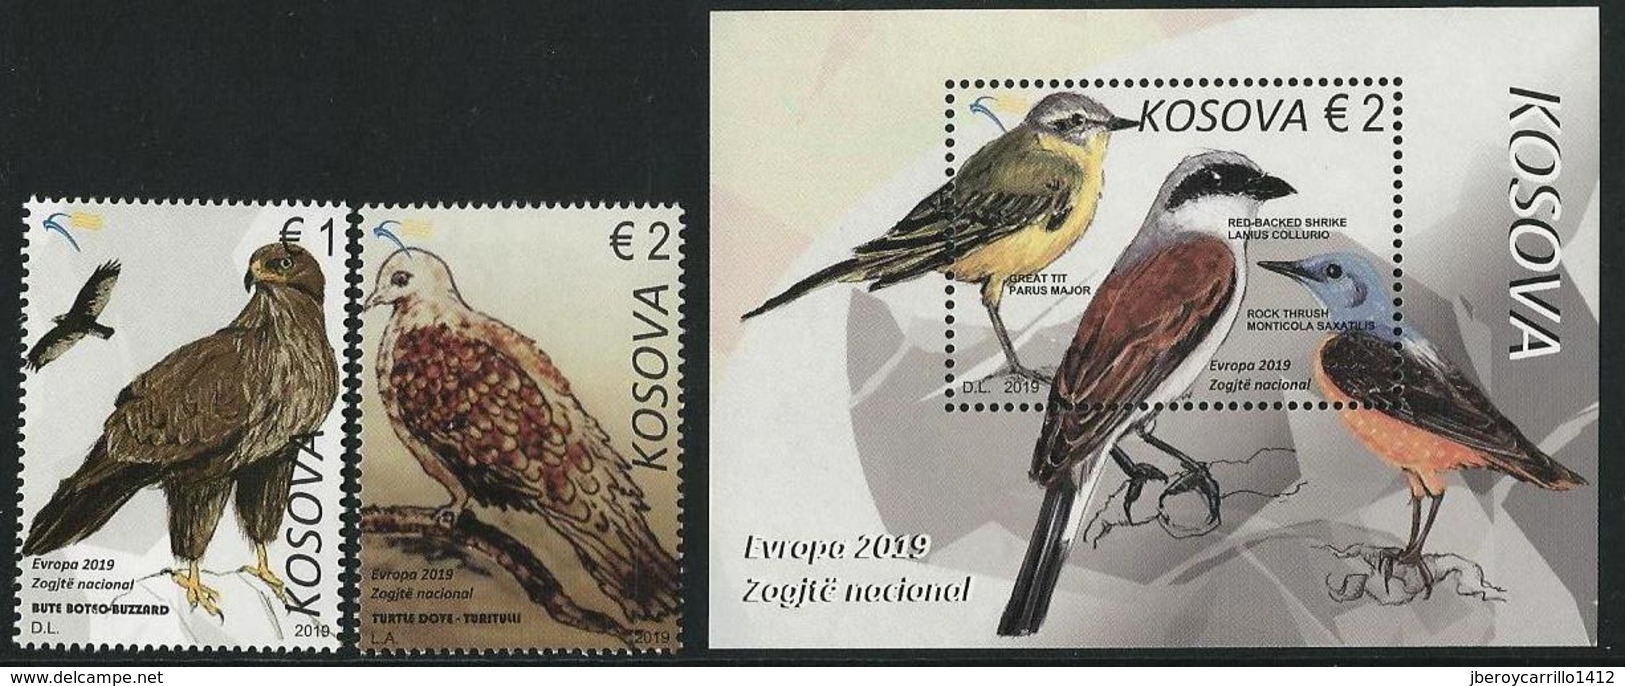 KOSOVO /KOSOVA REPUBLIC -EUROPA 2019 -NATIONAL BIRDS.-"AVES -BIRDS -VÖGEL -OISEAUX"- SERIE + HOJITA BLOQUE - 2019